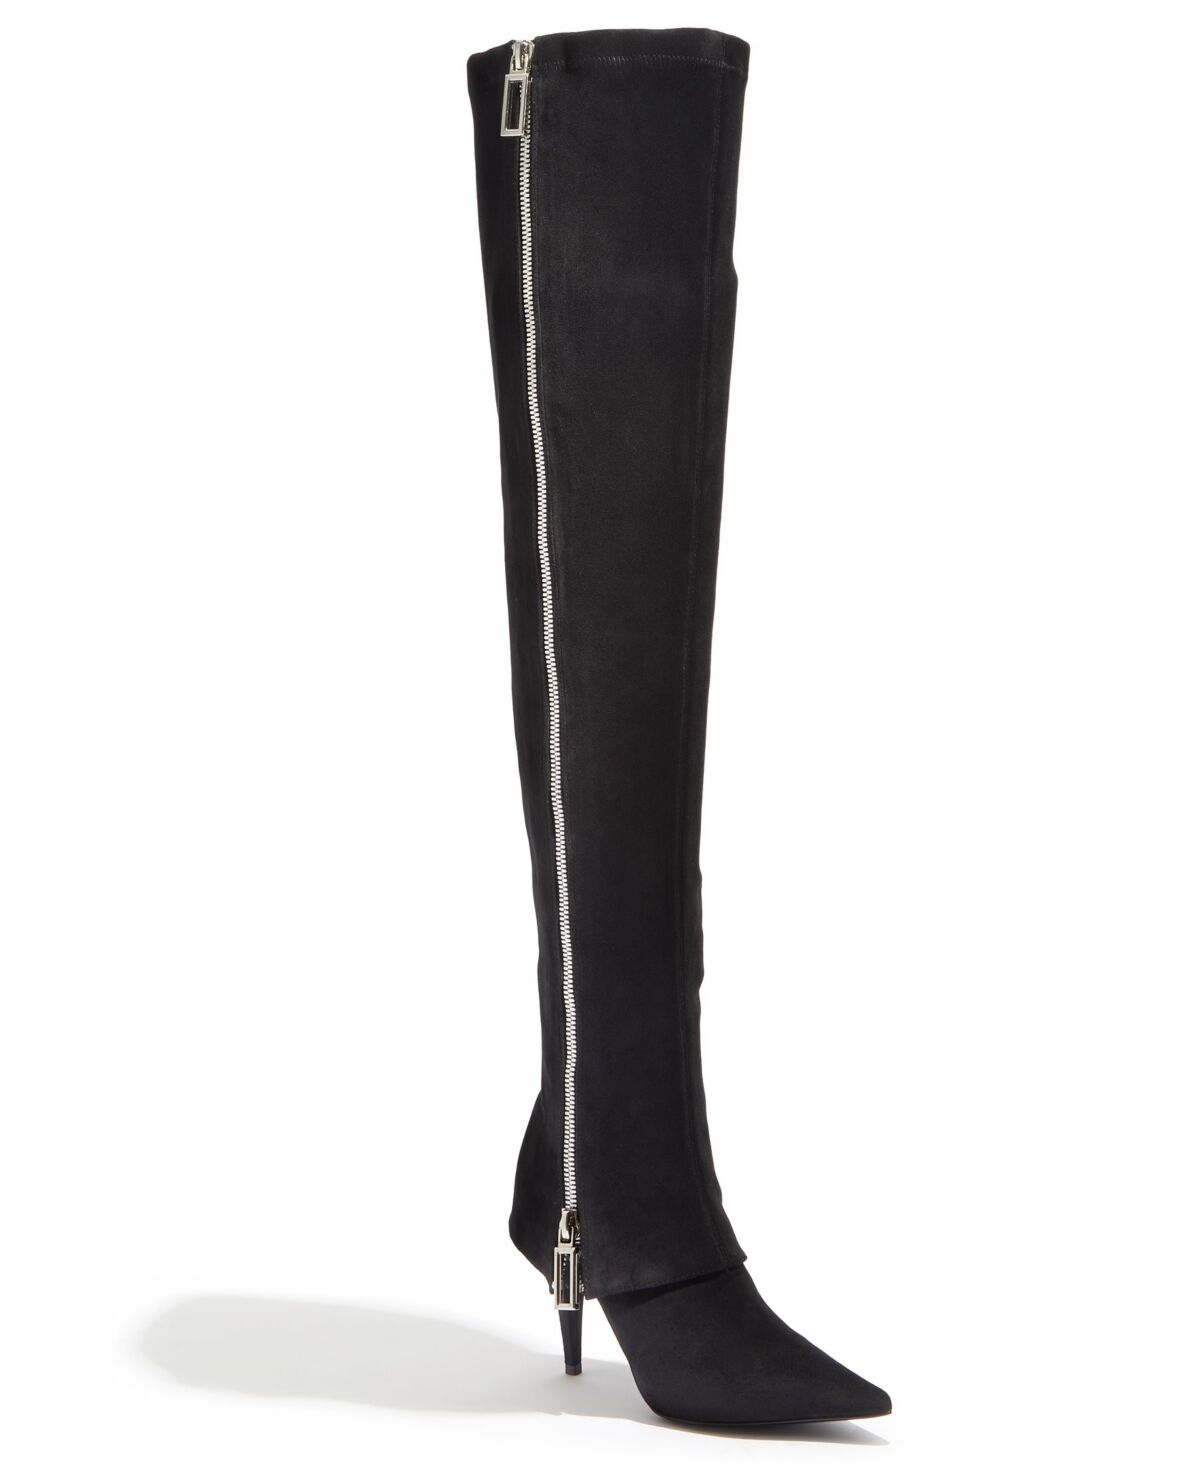 Twelve Am Womens Suede Thigh High Boots ( Manhattan) - Black suede with silver zipper